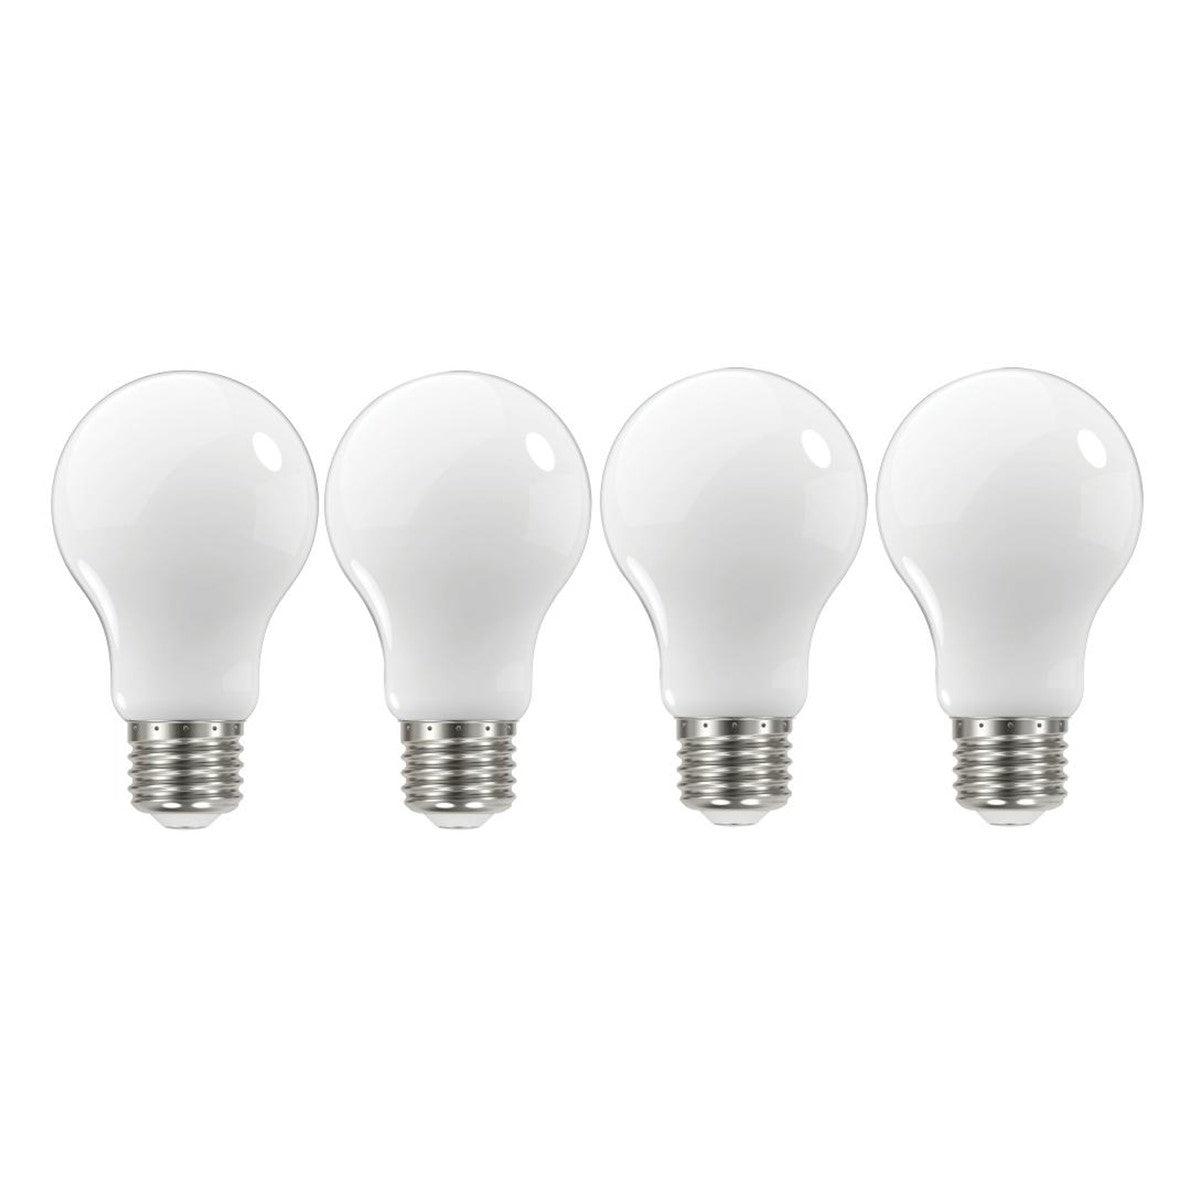 A19 LED Bulb, 75W Equivalent, 11 Watt, 1100 Lumens, 2700K, E26 Medium Base, Frosted Finish, Pack Of 4